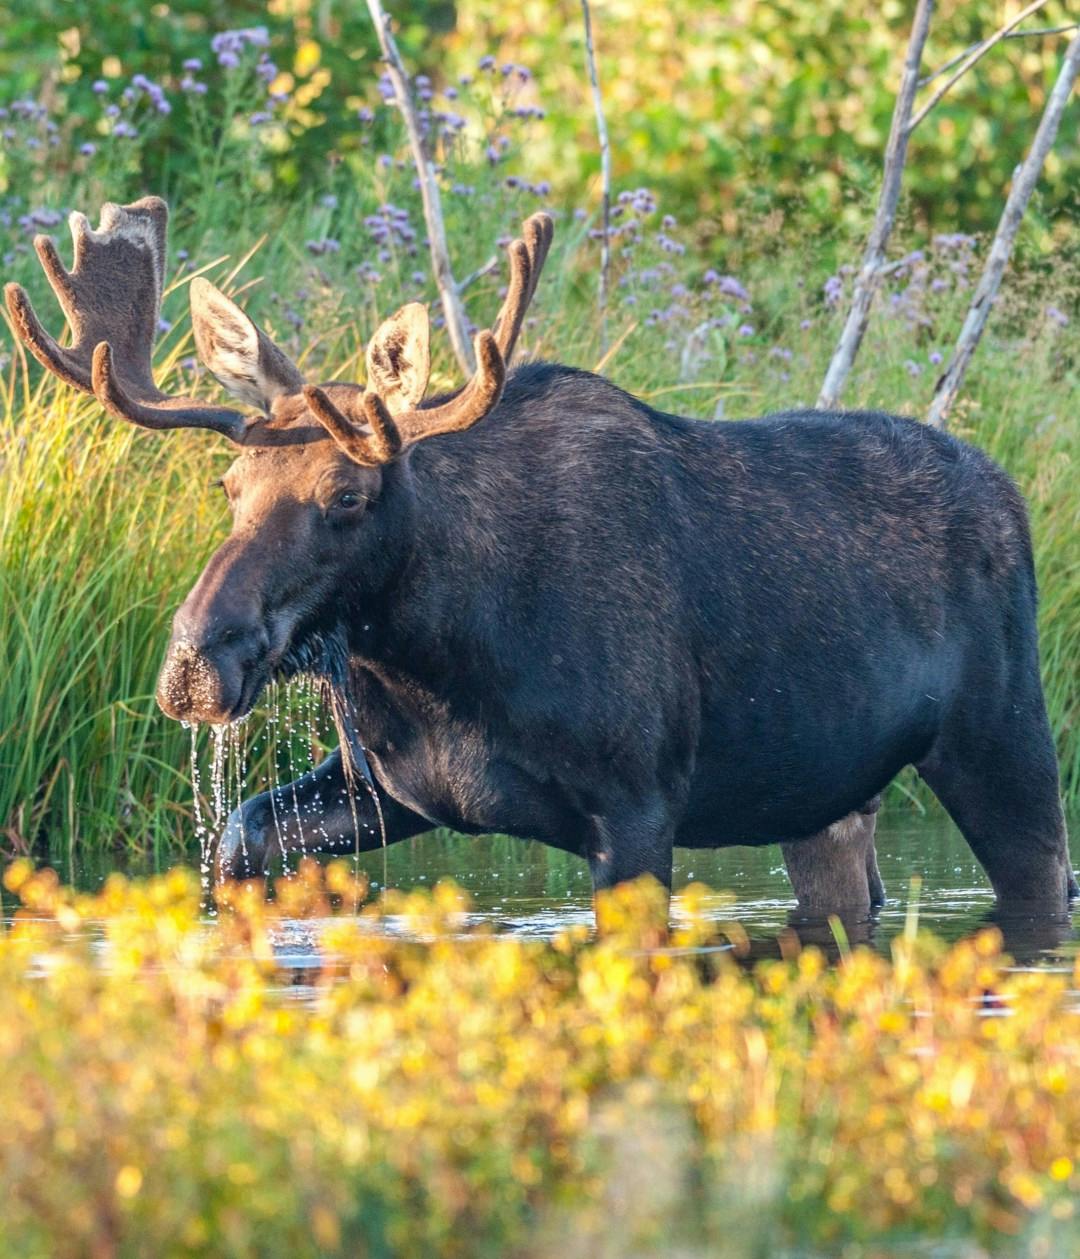 a moose